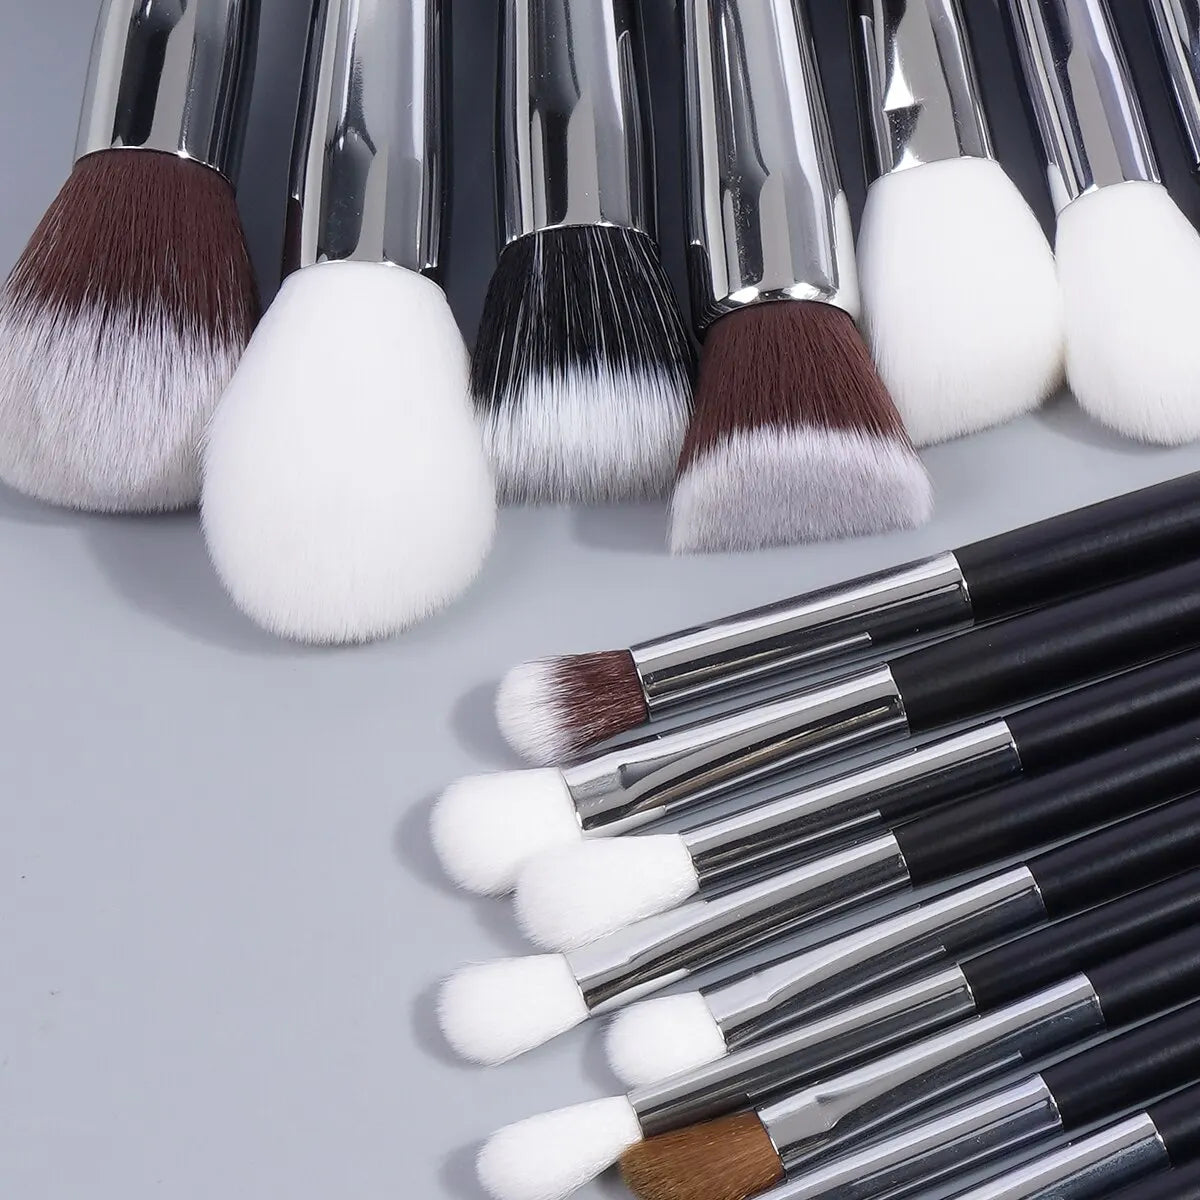 30PCs Professional Makeup Brushes Set Cosmetic Beauty Tools Foundation Eyeshadow Concealer Blend Brushes Fluffy Bristle Powder